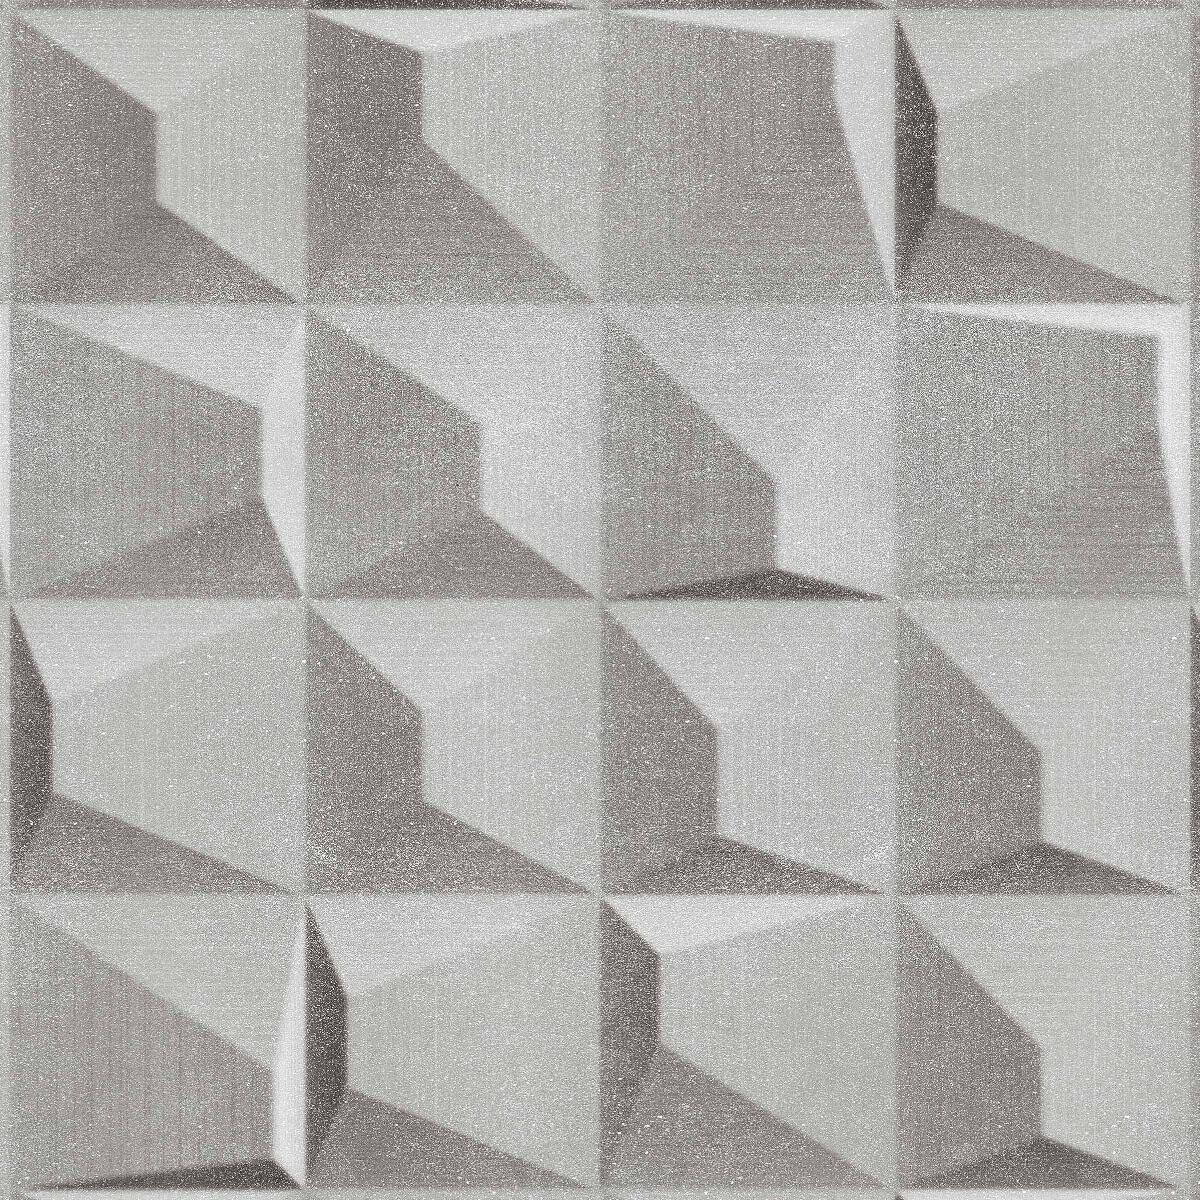 Grey Tiles for Bathroom Tiles